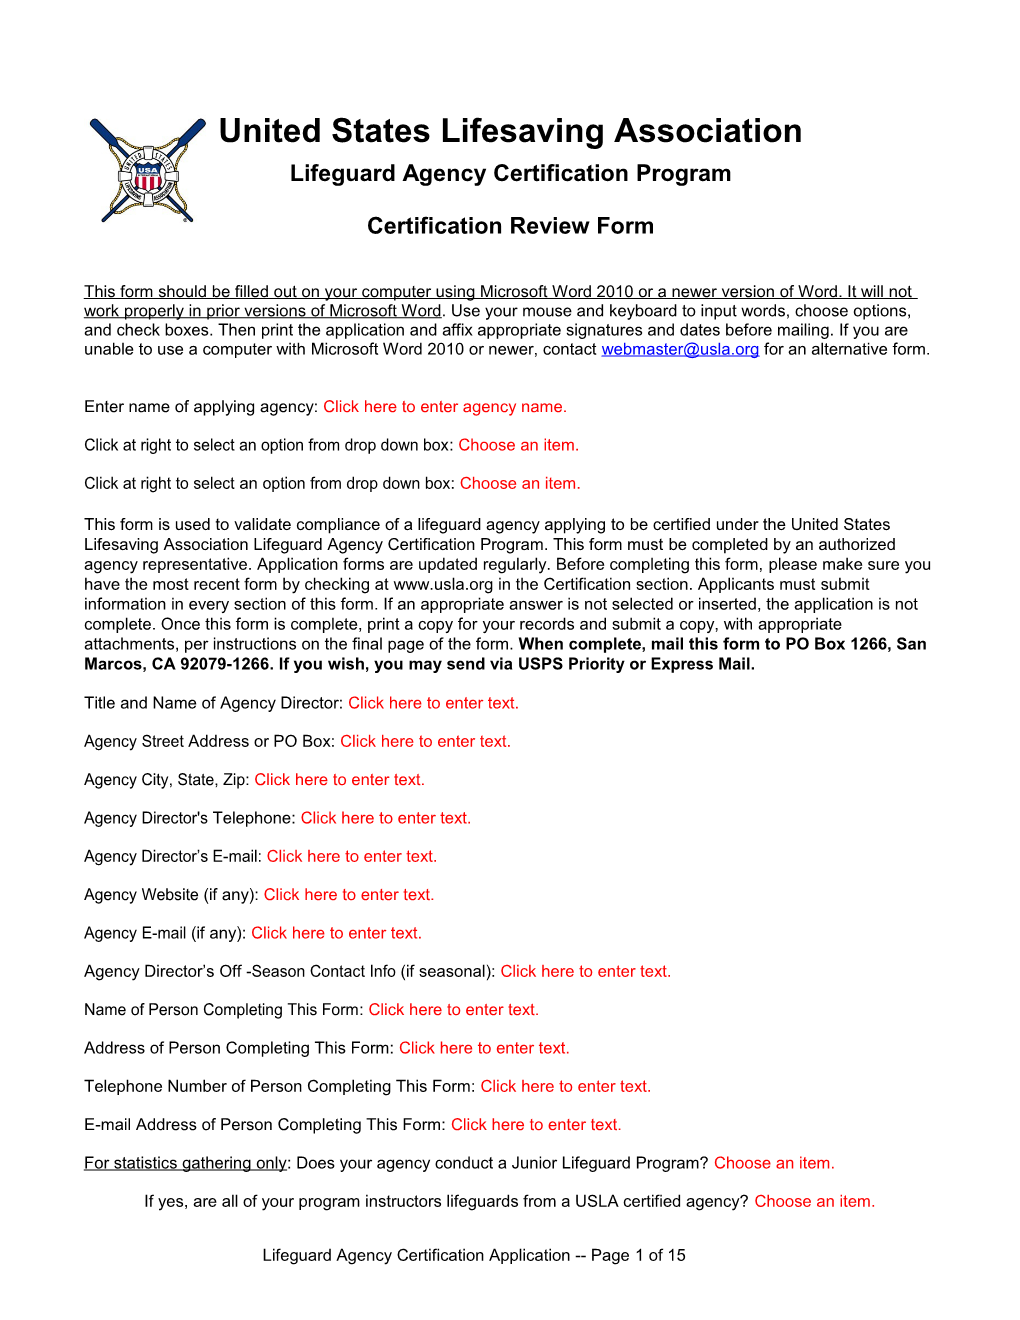 Lifeguardagency Certificationprogram